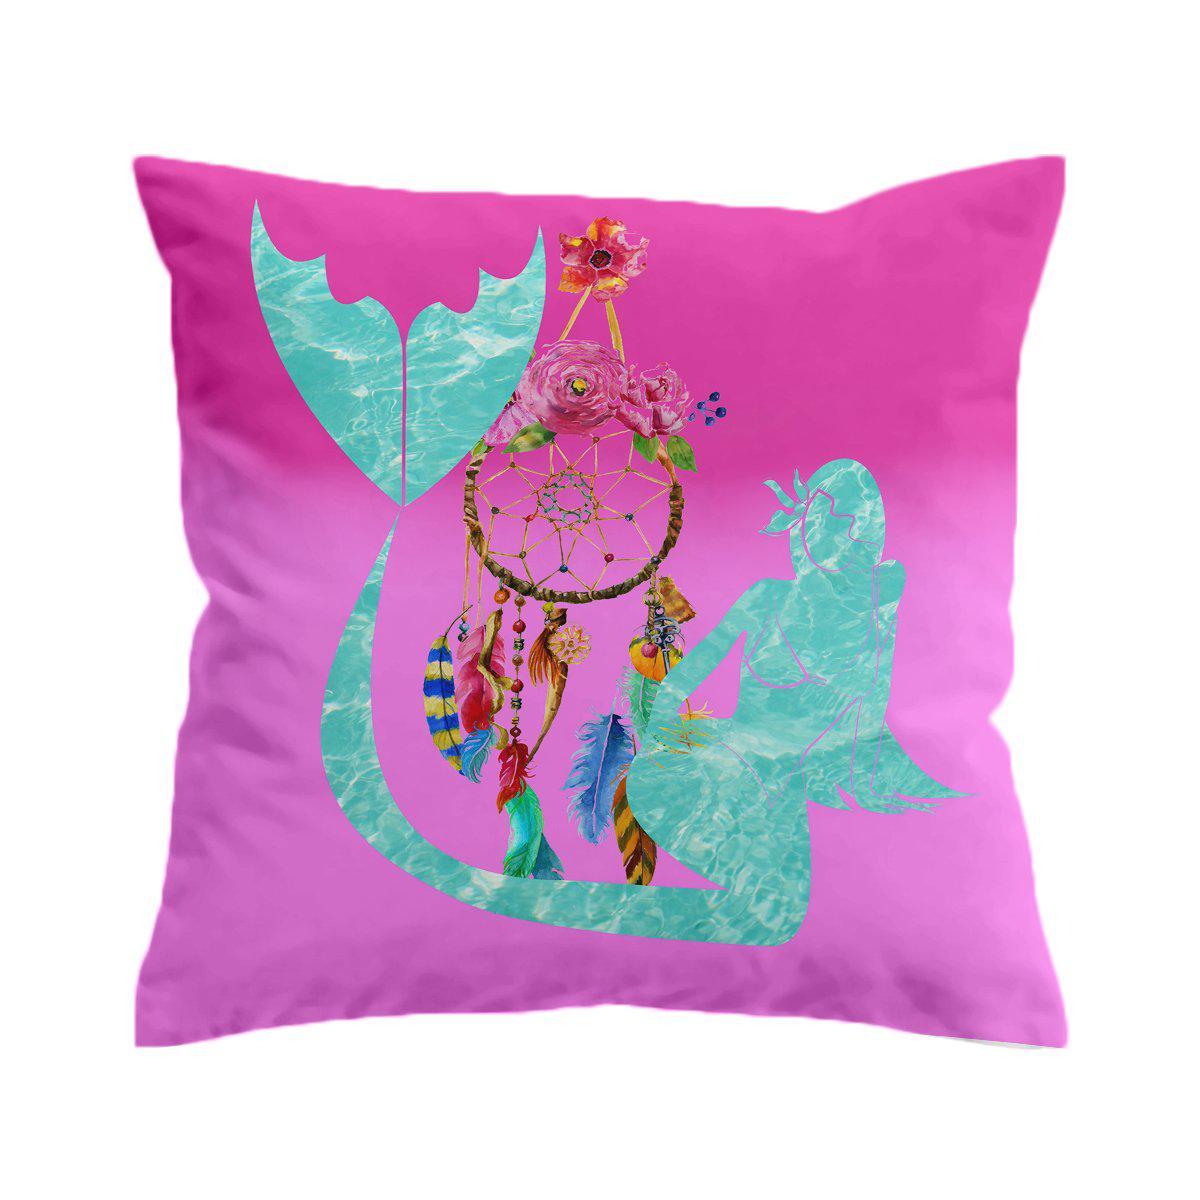 Mermaid Dreaming Pillow Cover